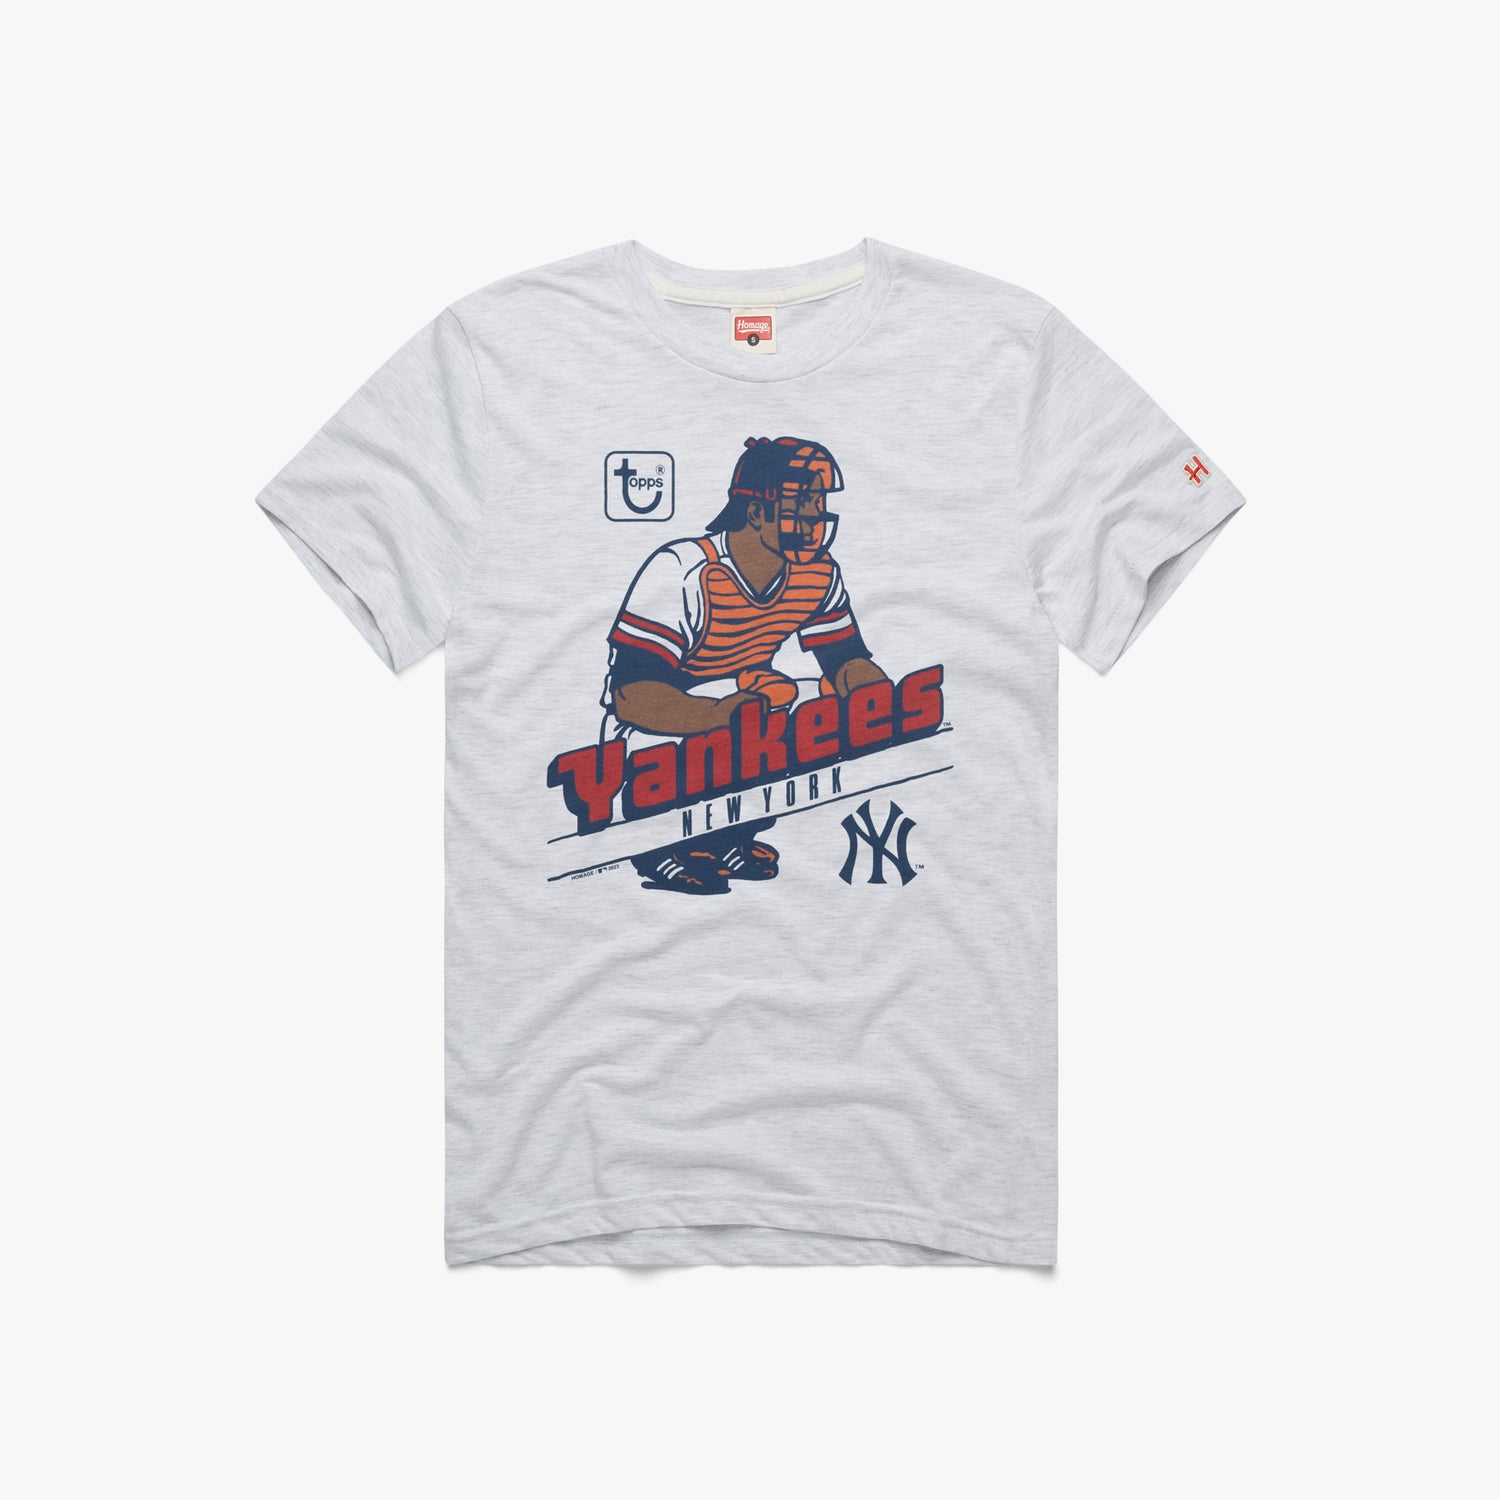 HOMAGE T-Shirt New York Black Yankees Negro League Baseball Medium